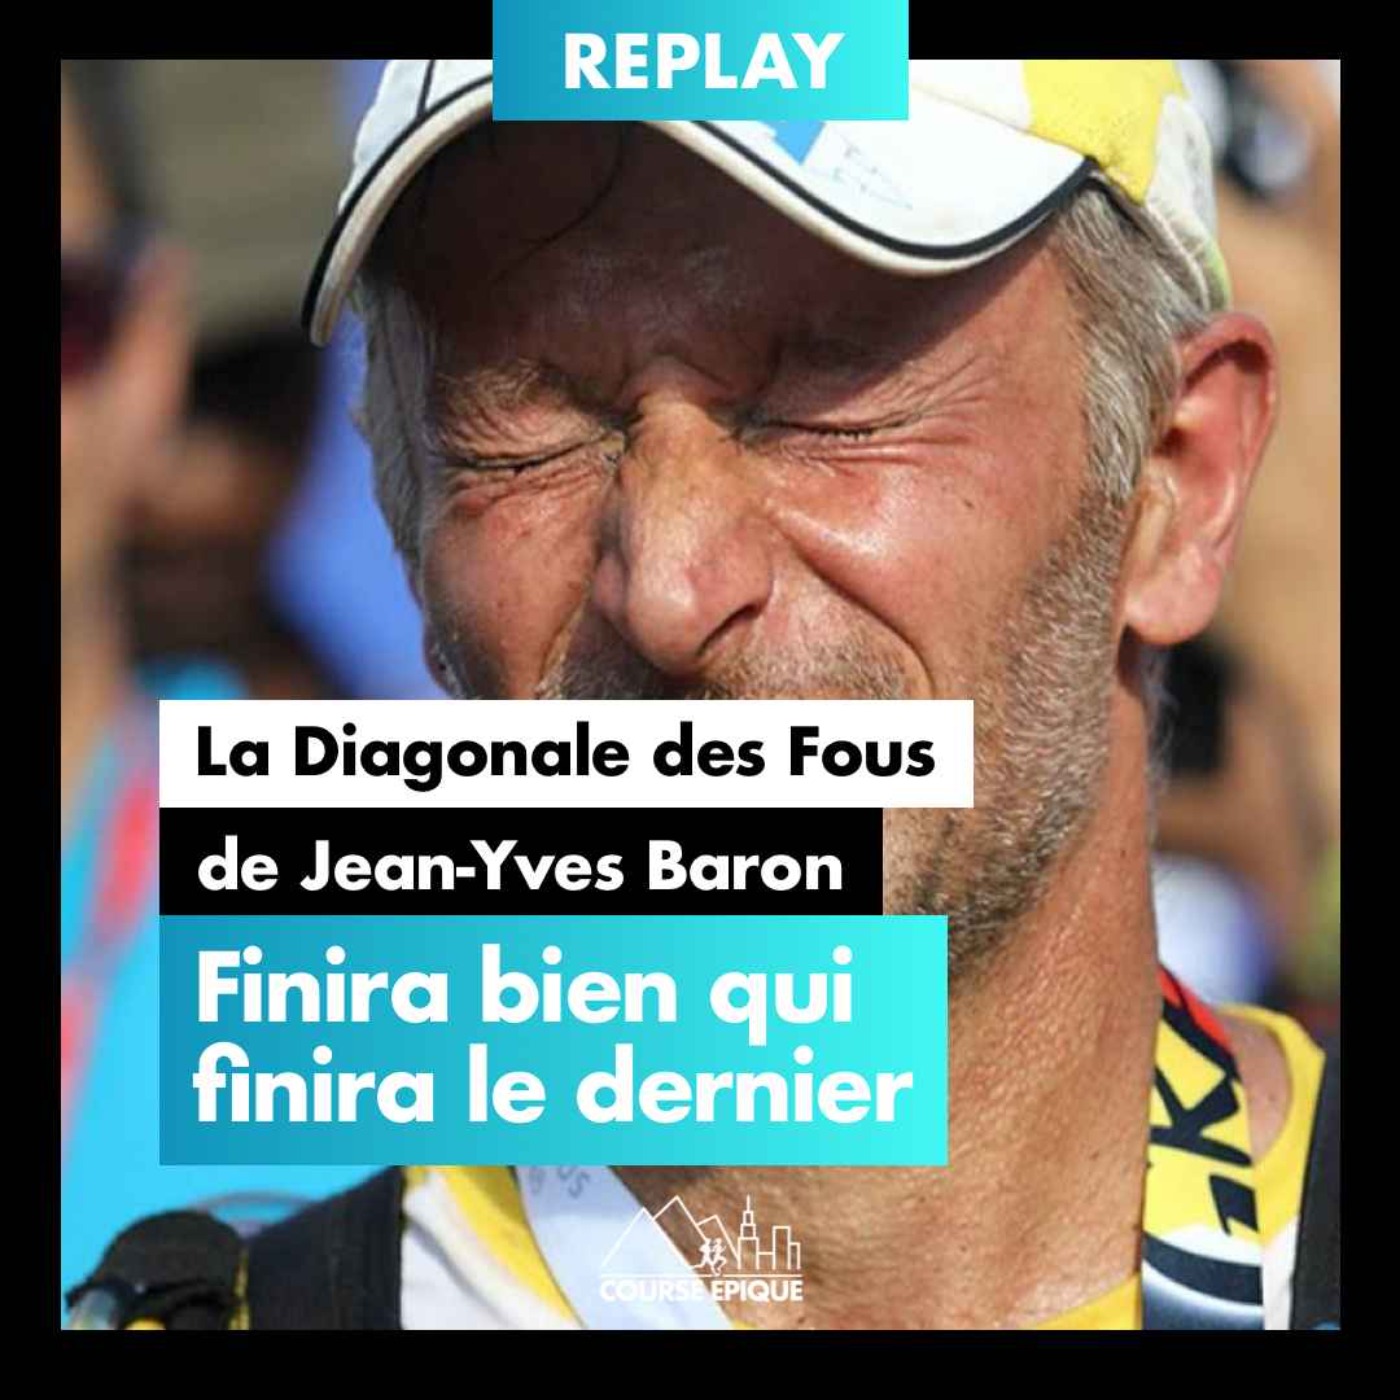 [REPLAY] "Finira bien qui finira le dernier" la Diagonale des Fous de Jean-Yves Baron